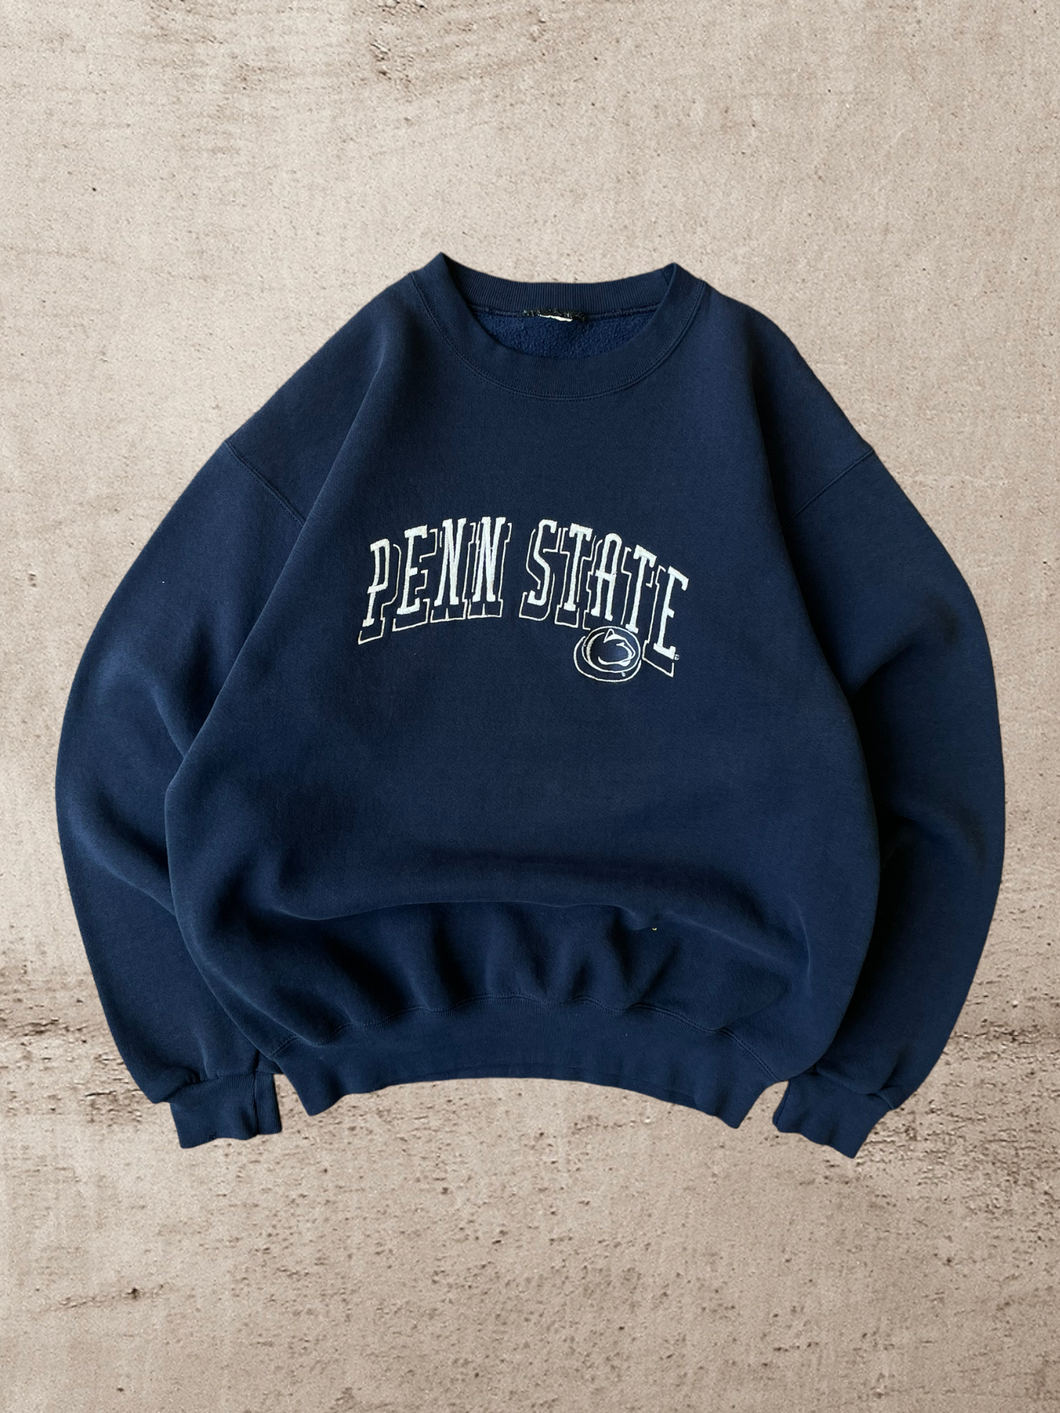 90s University of Penn State Crewneck - Large